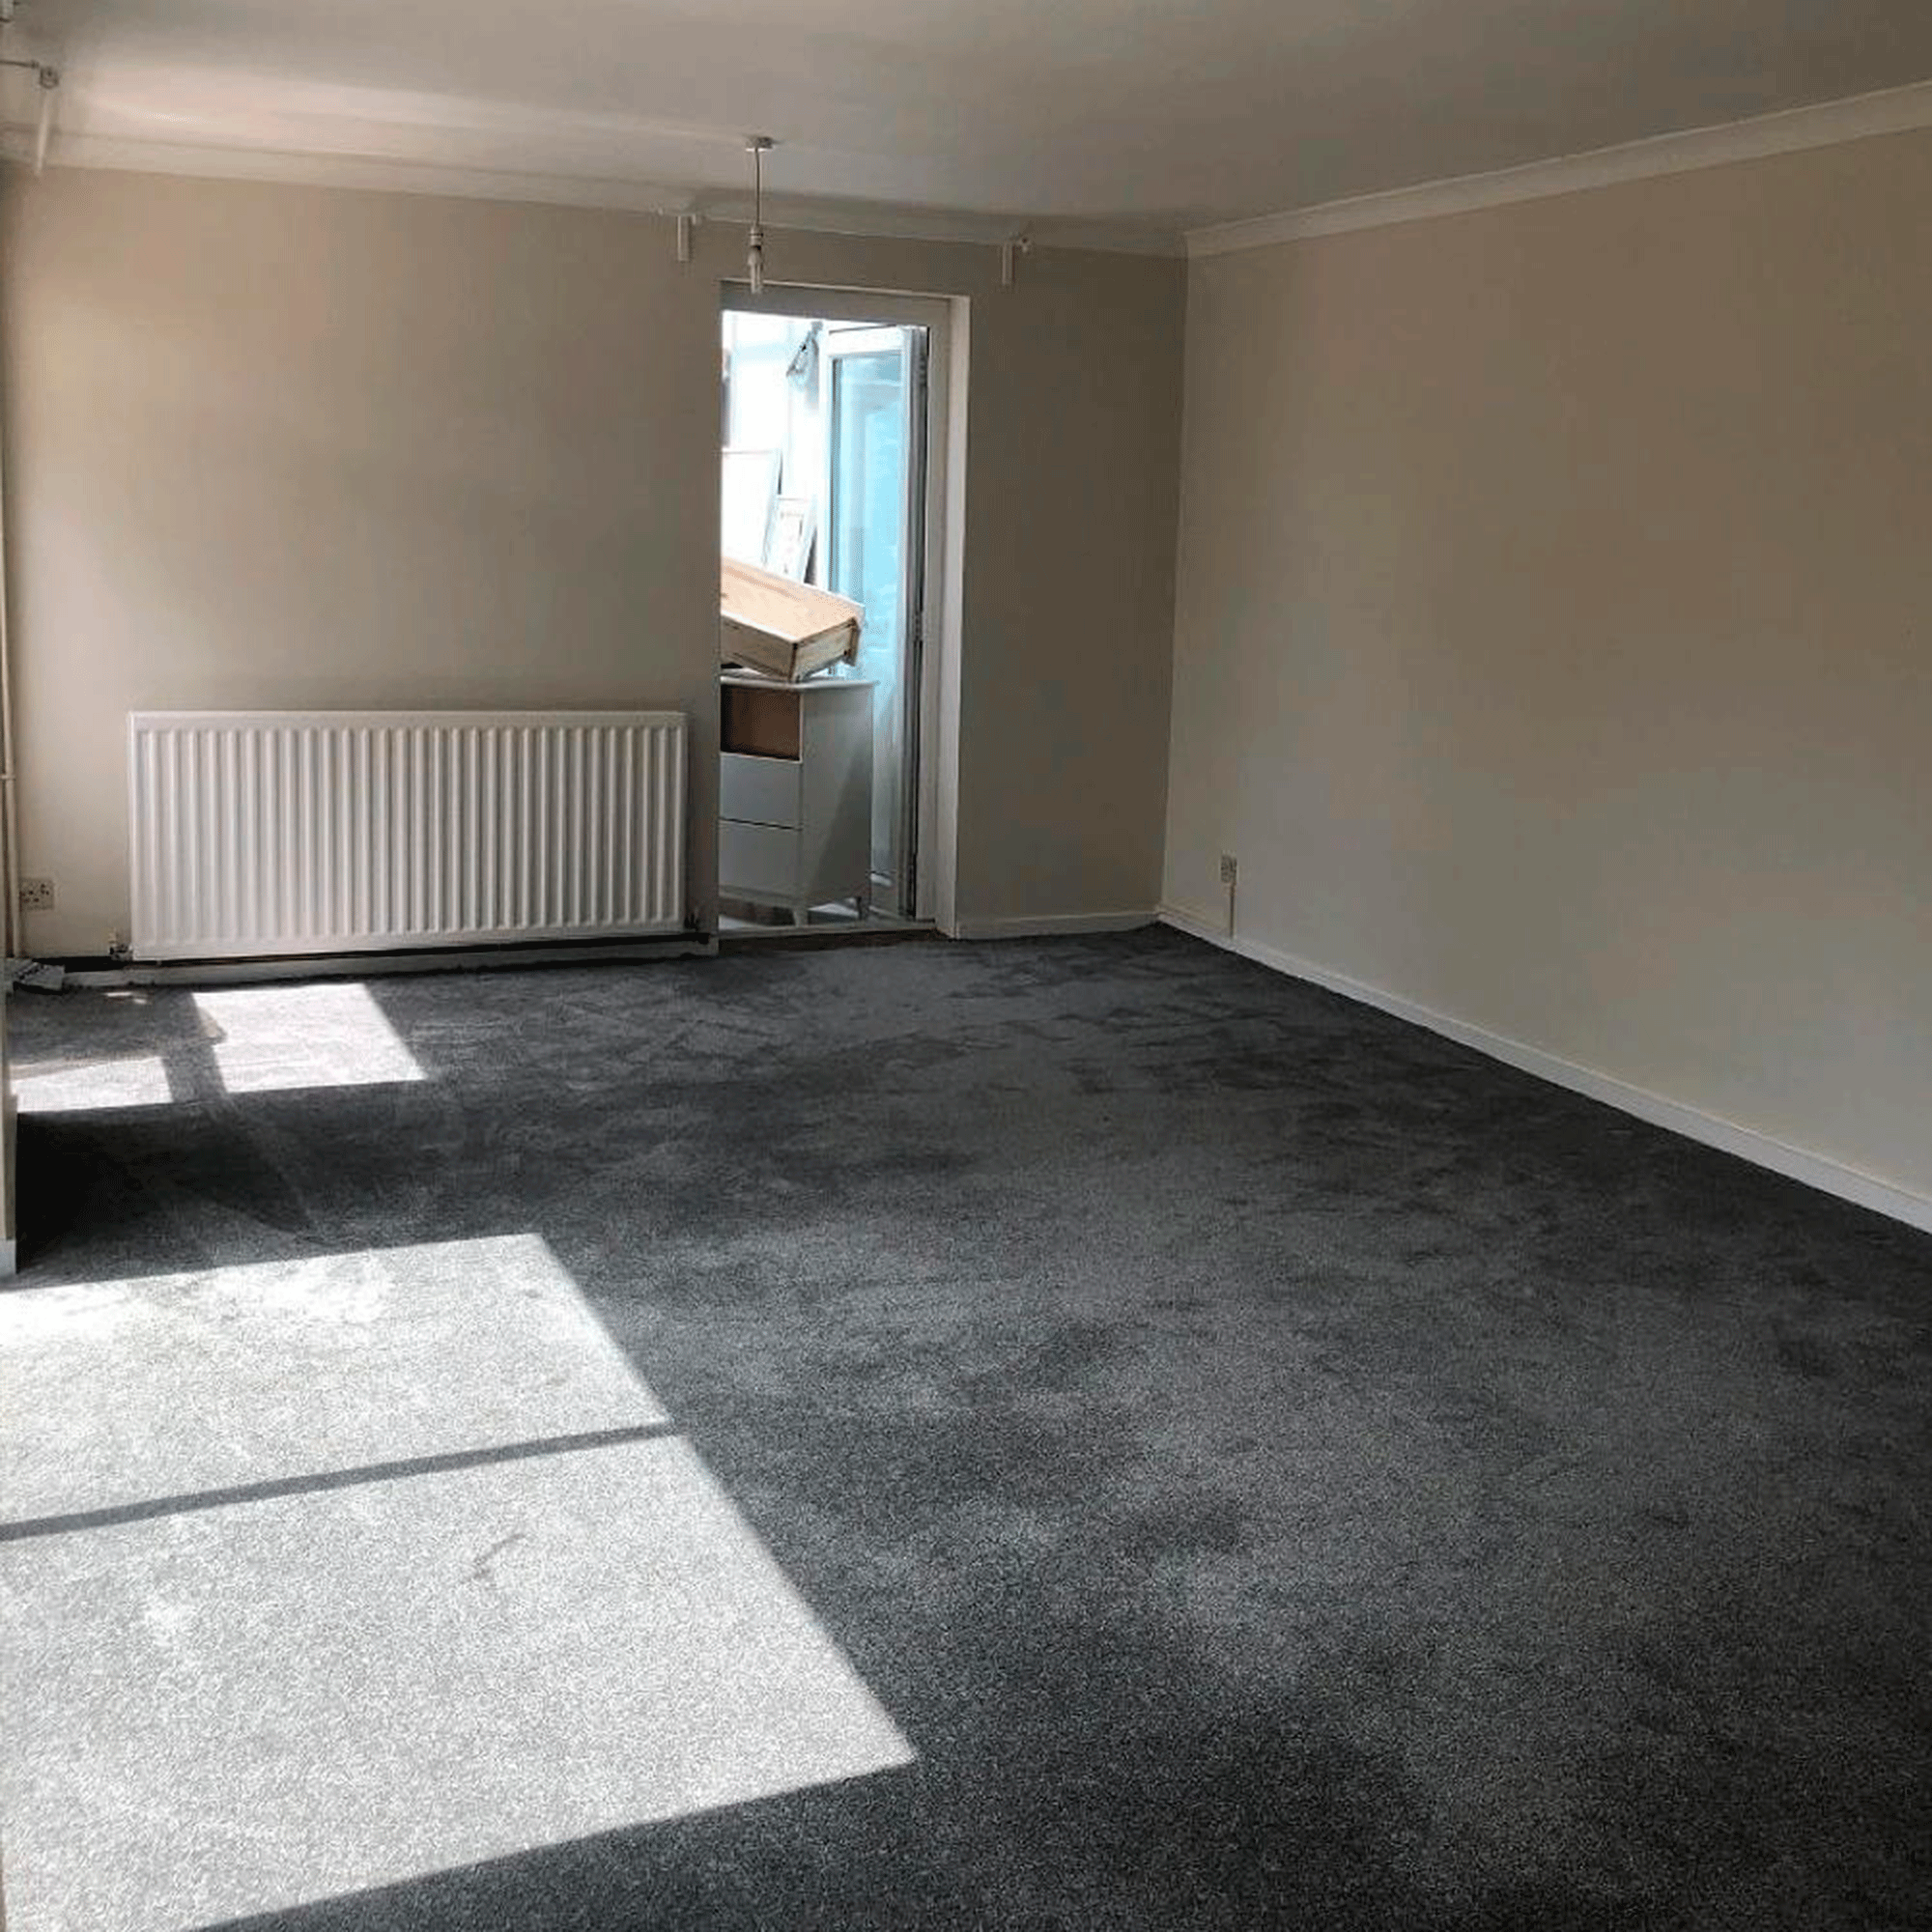 Carpet in living room before makeover